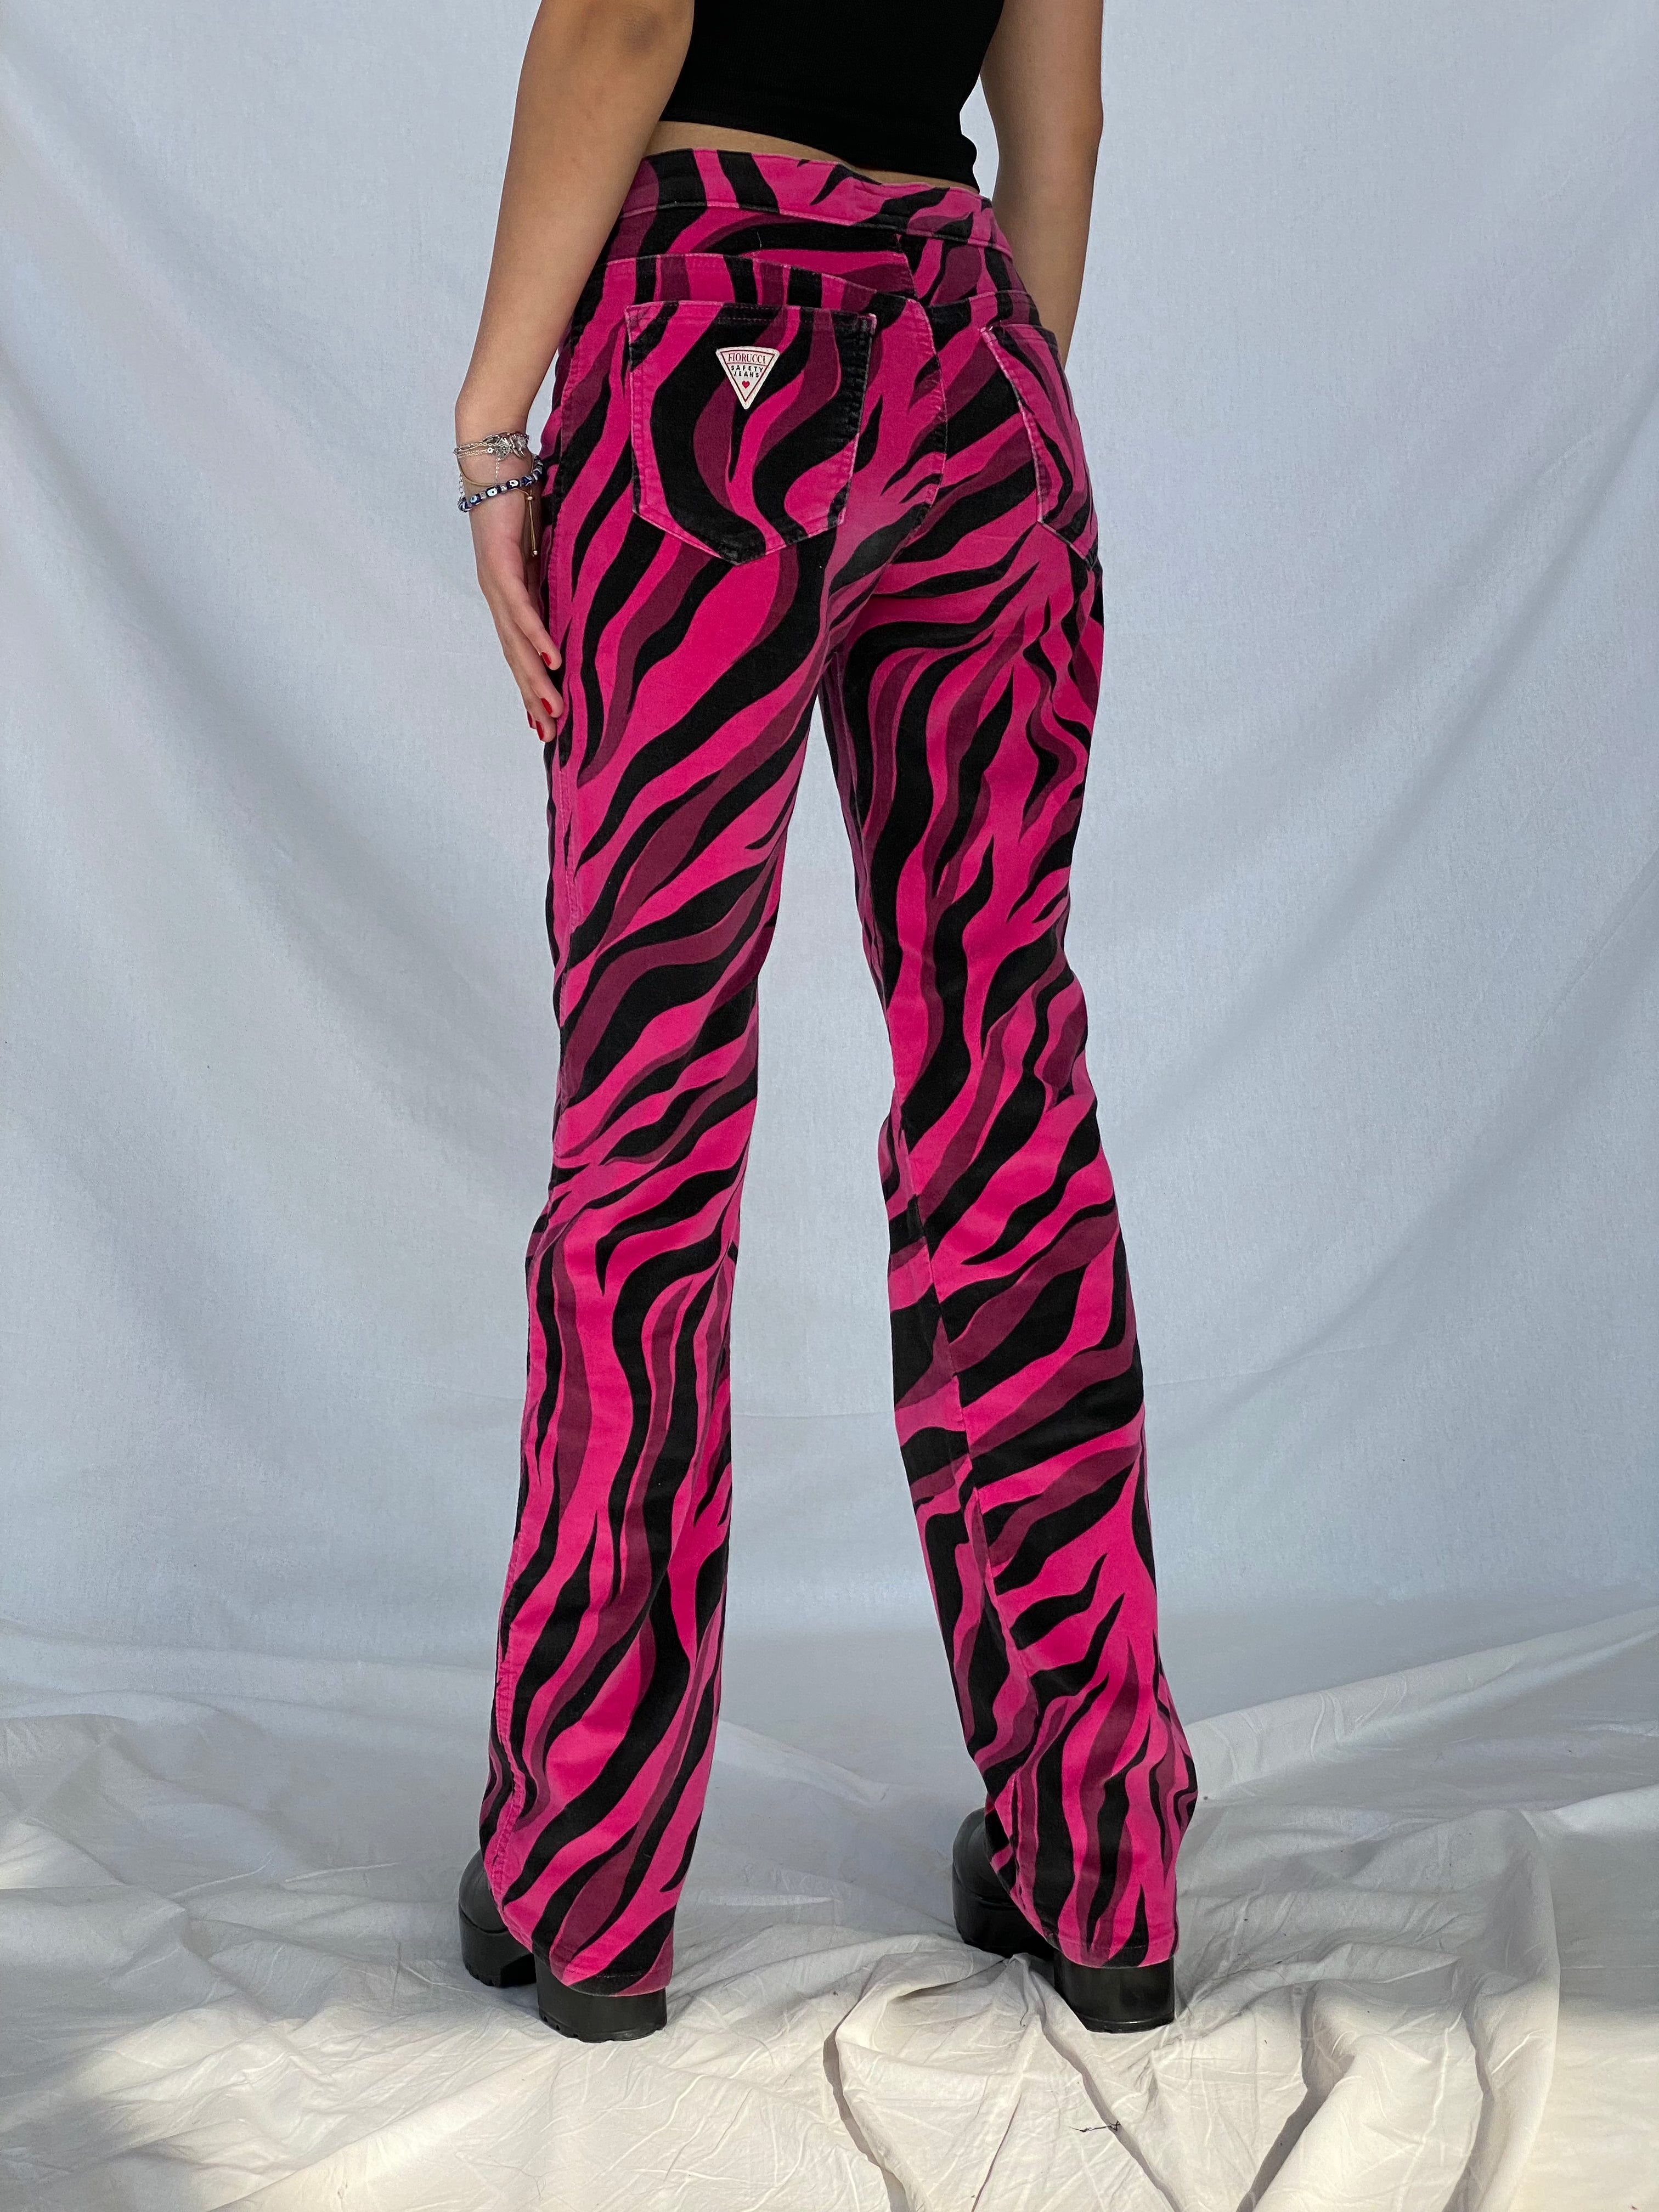 RARE Vintage 80s FIORUCCI Safety Jeans- Pink and Black- Zebra